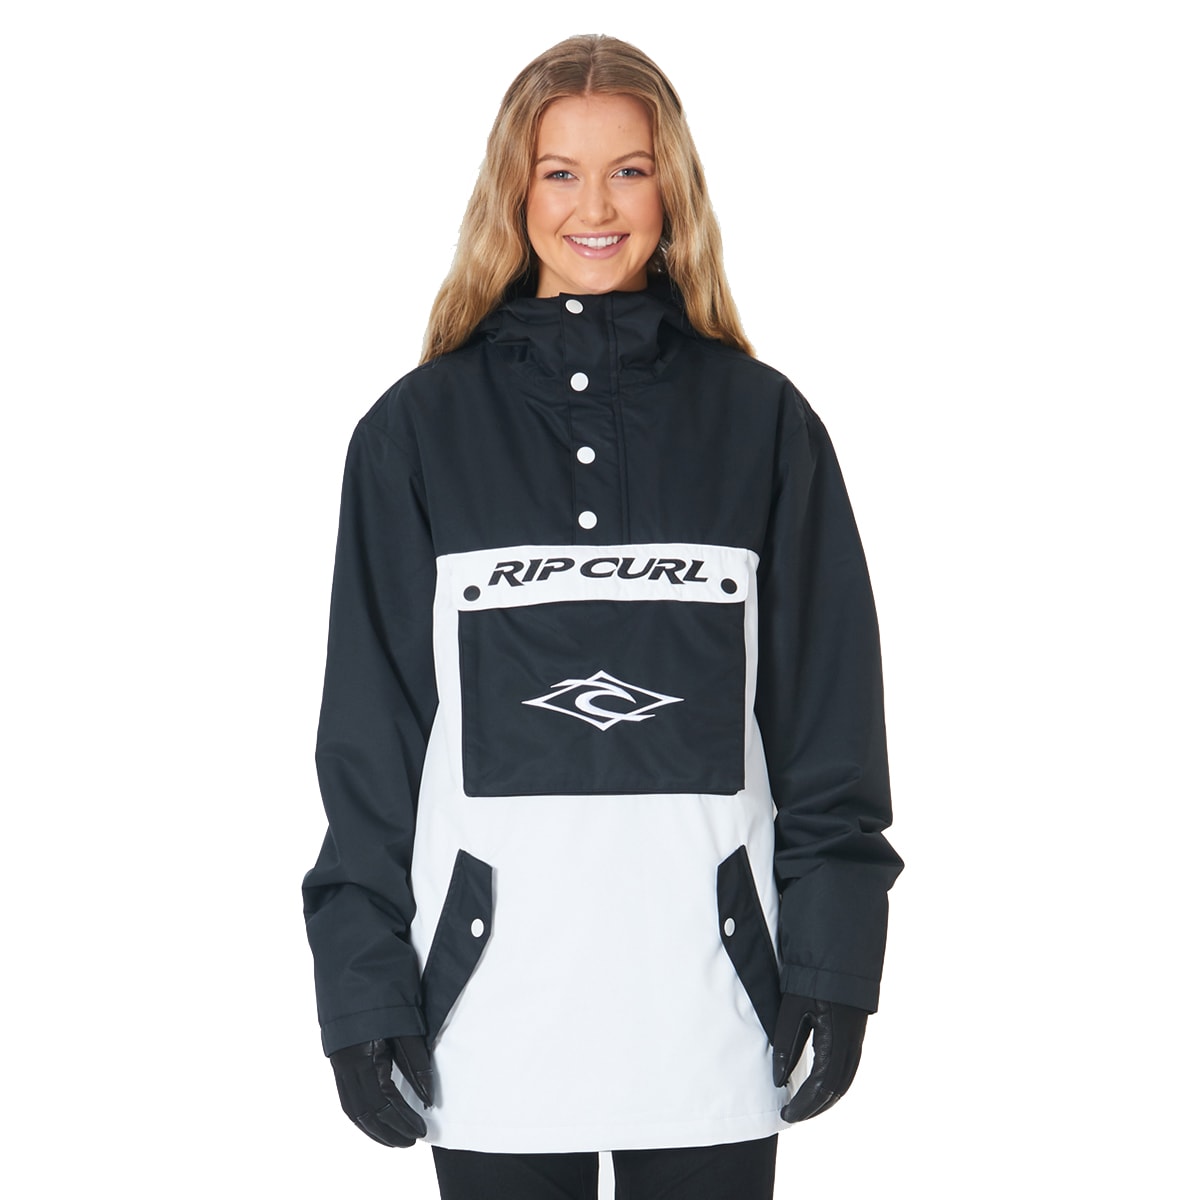 eigendom Vertrek personeel Buy Rip Curl Unisex Primative Snow Jacket from Outnorth